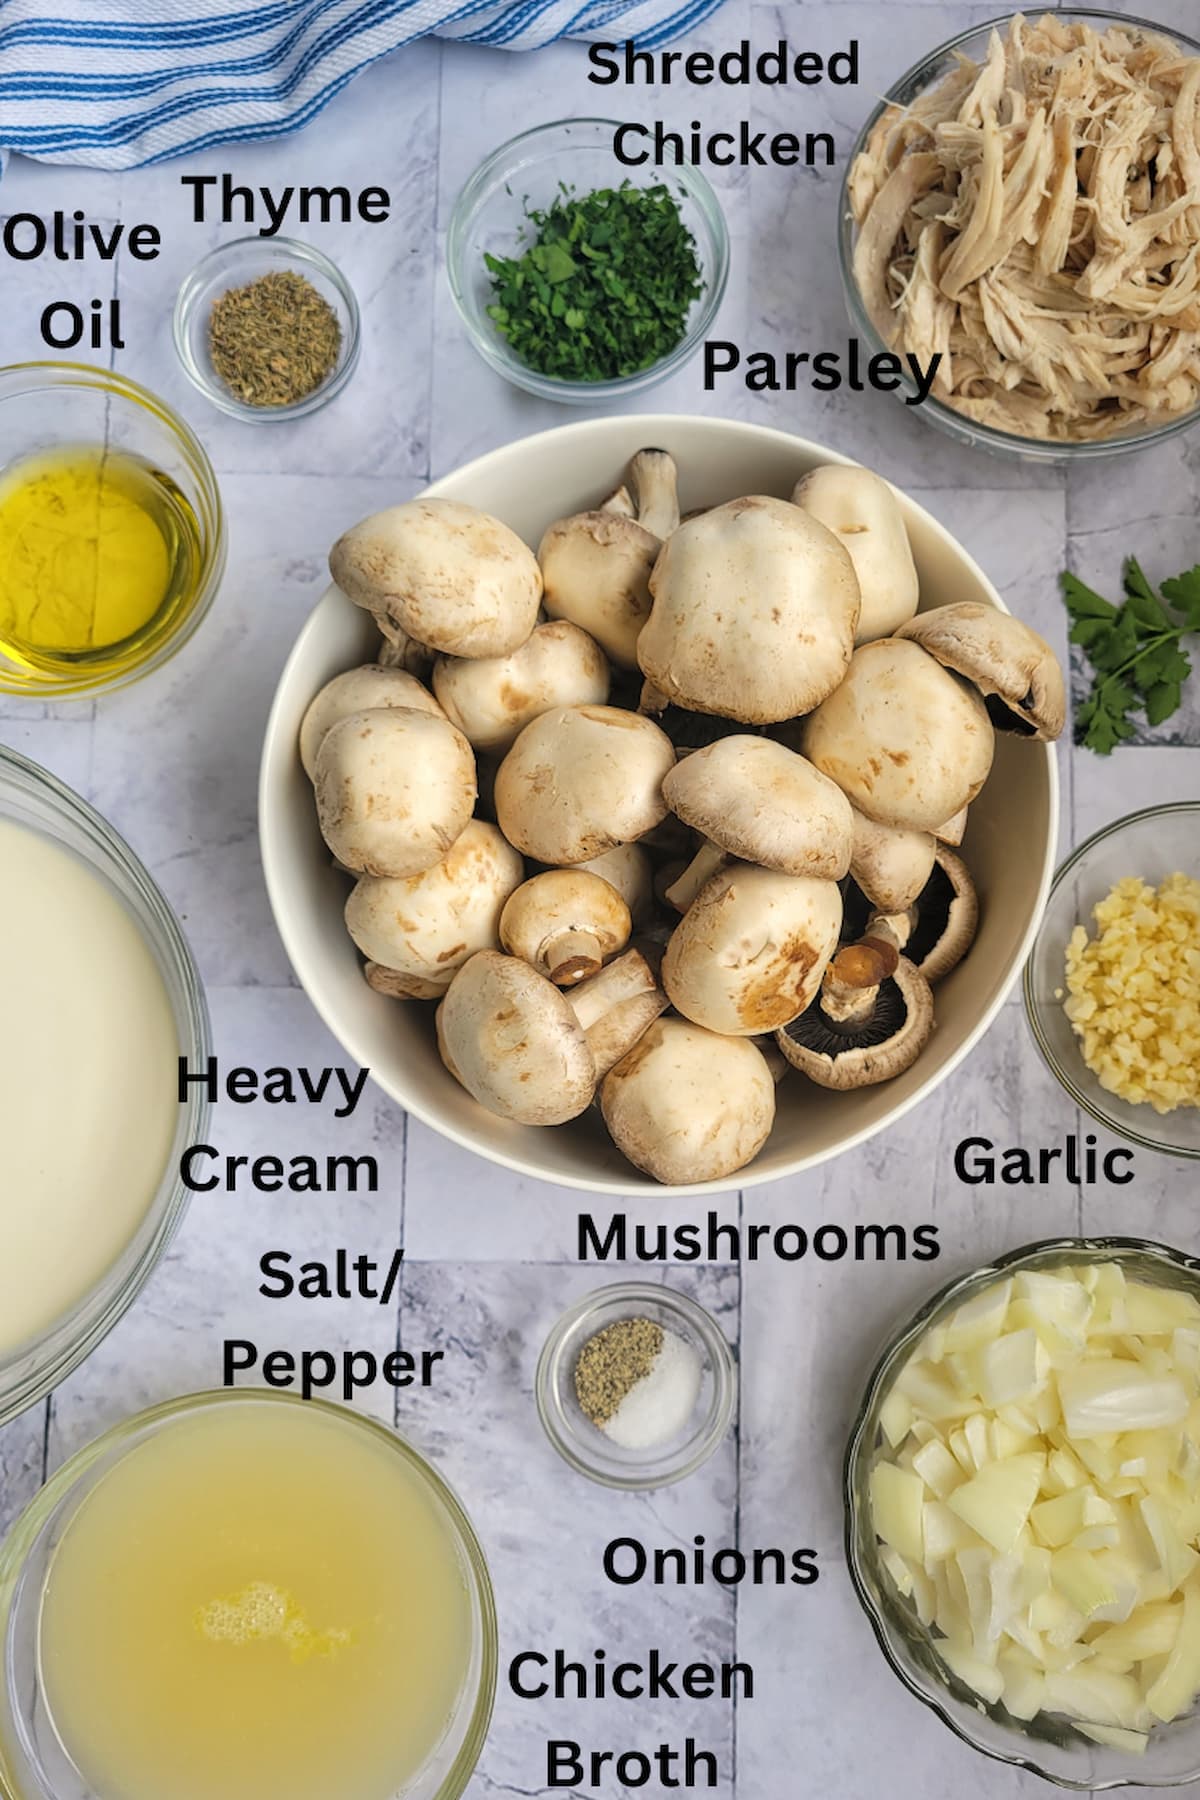 ingredients for cream of mushroom chicken soup - mushrooms, shredded chicken, parsley, thyme, olive oil, garlic, heavy cream, chicken broth, salt/pepper, onions